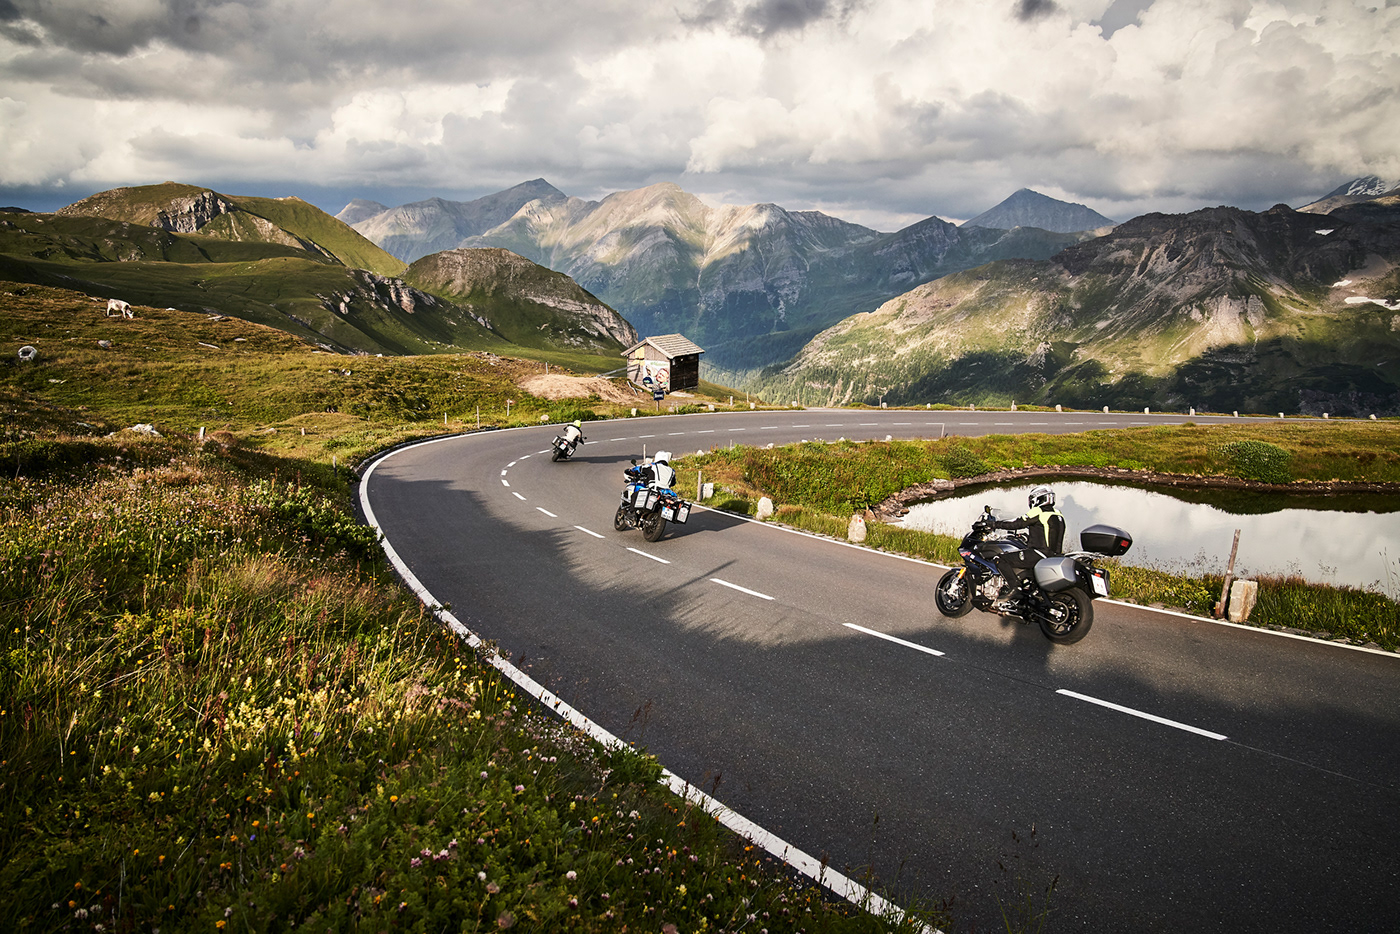 adac Travel motorcycle Bike ride grossglockner austria alps mountains roads